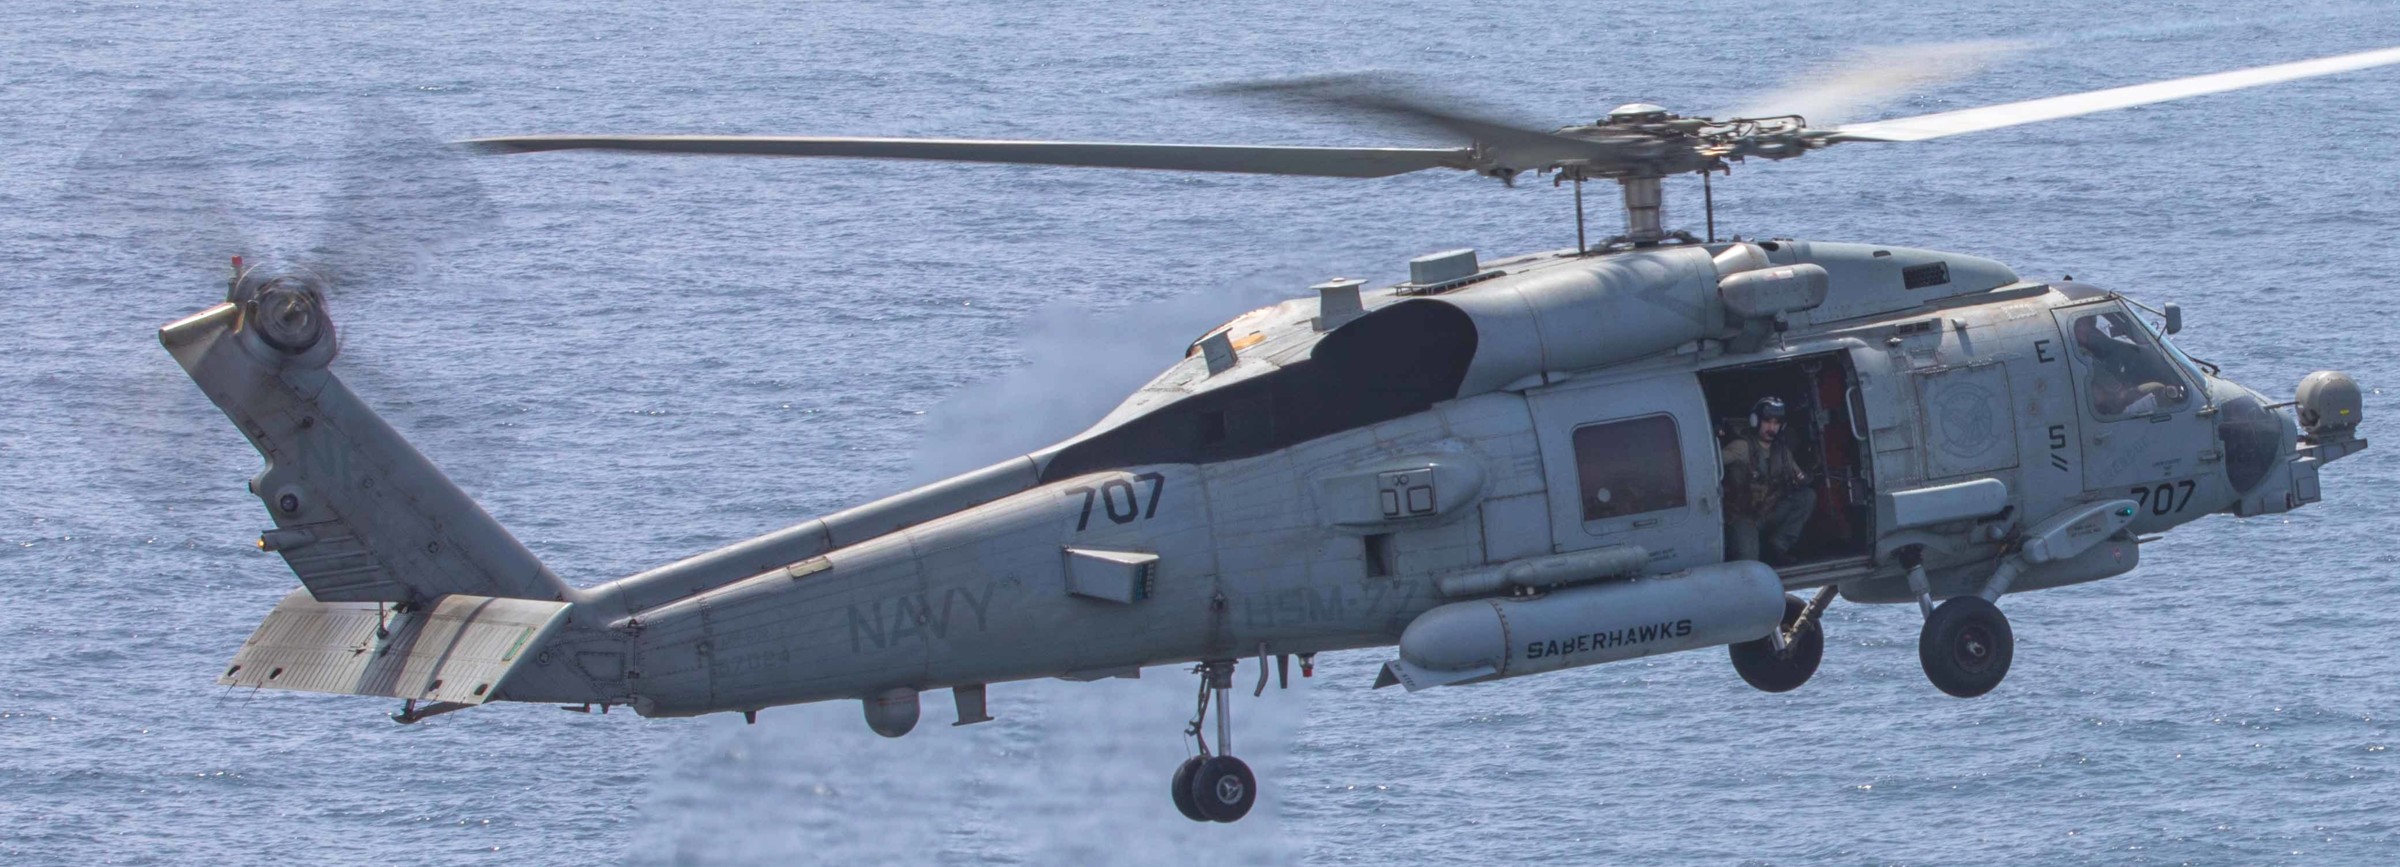 hsm-77 saberhawks helicopter maritime strike squadron mh-60r seahawk cvw-5 cvn-76 uss ronald reagan 89